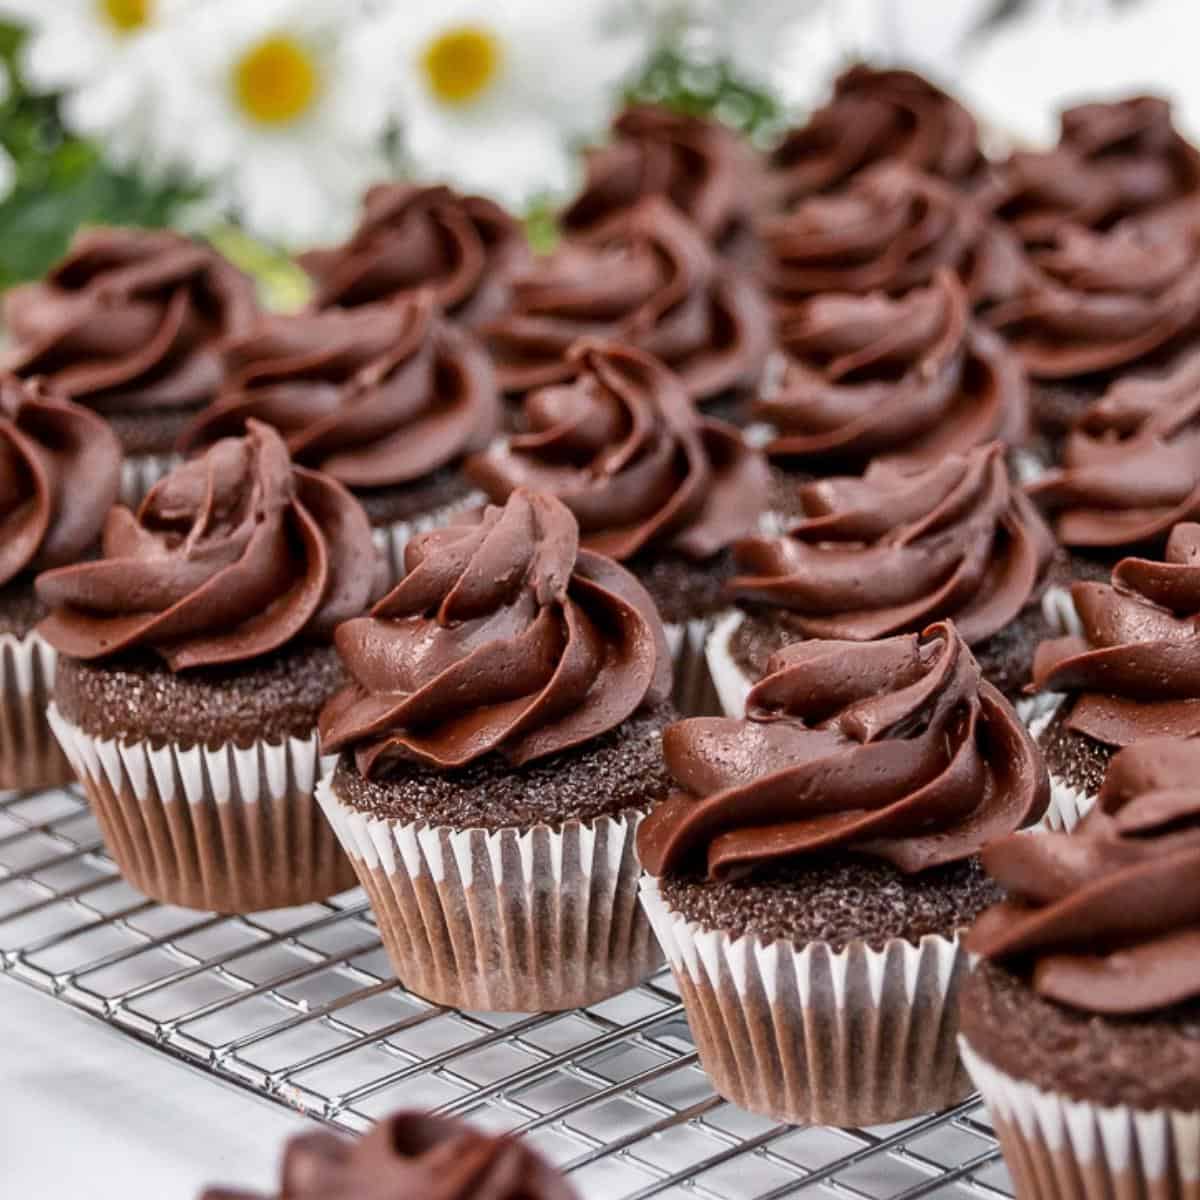 https://iscreamforbuttercream.com/wp-content/uploads/2022/08/mini-chocolate-cupcakes-featured-image.jpg